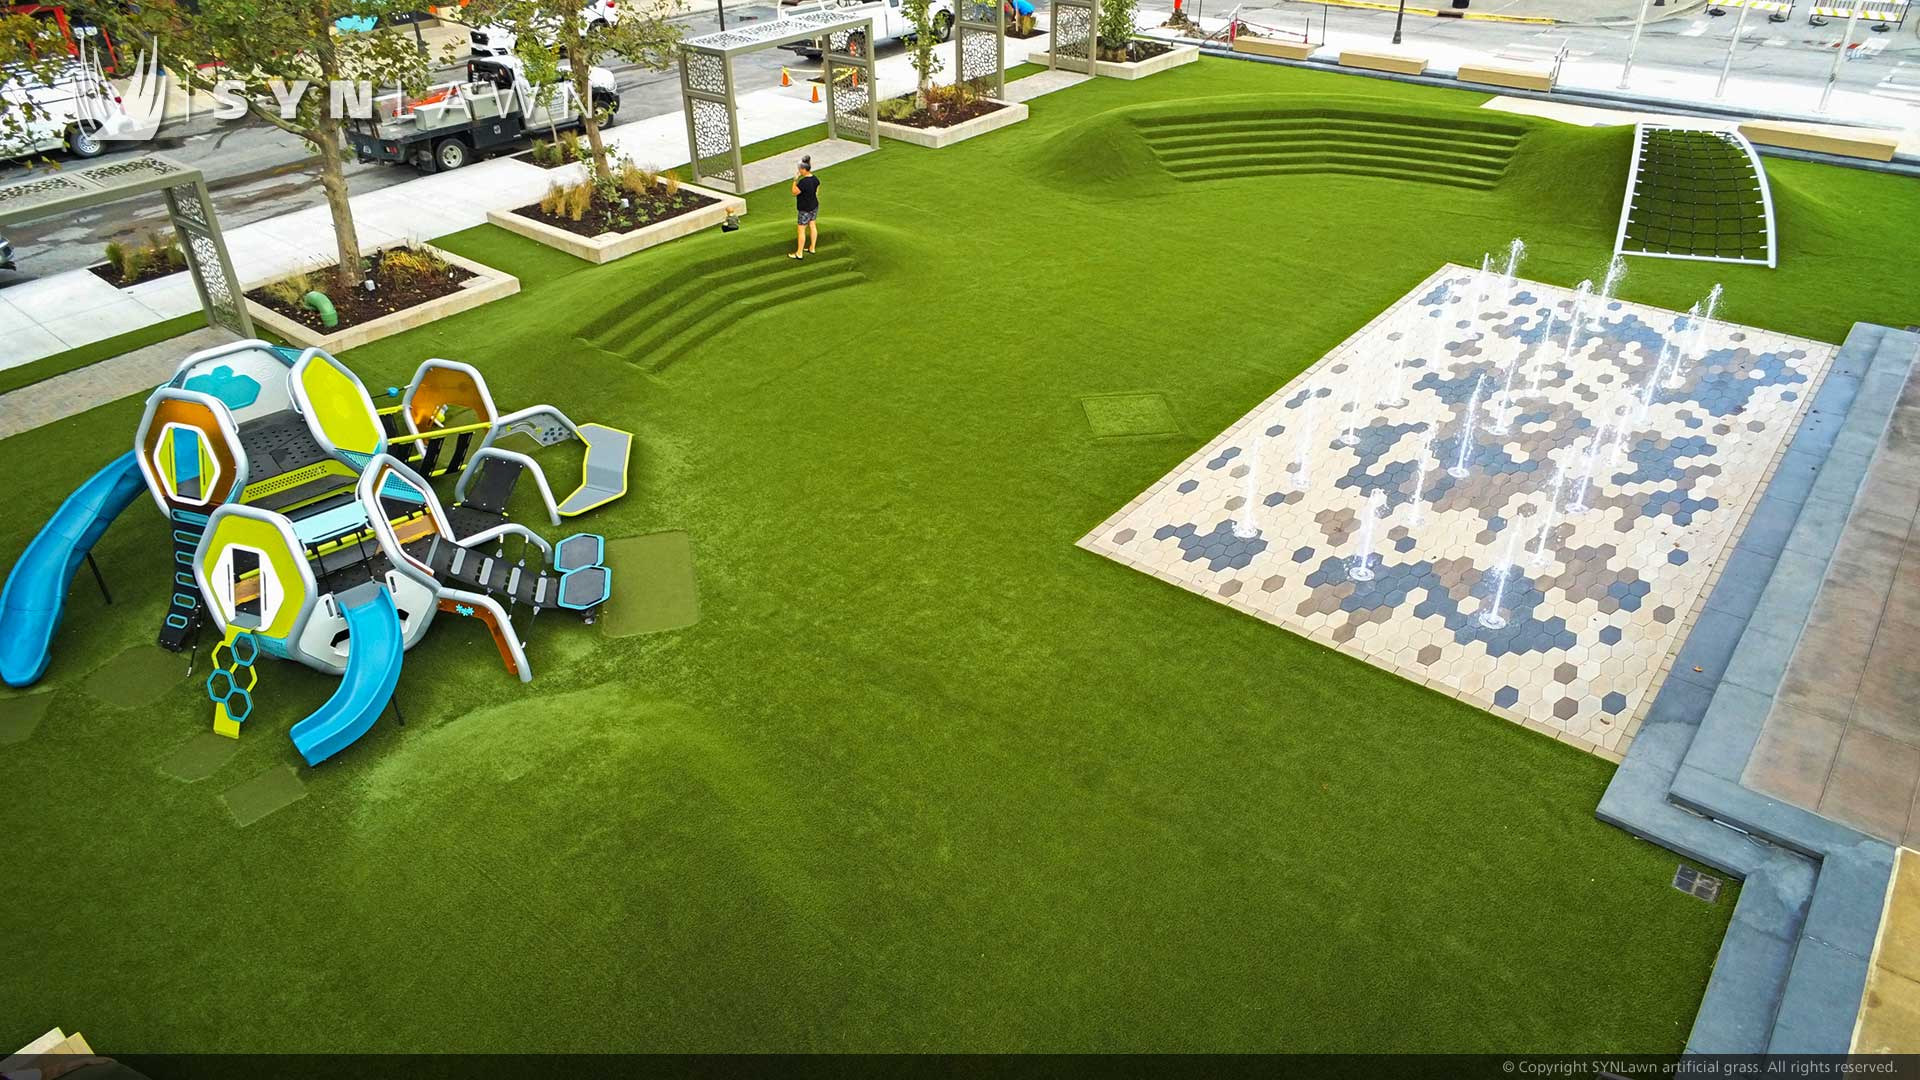 image of SYNLawn artificial grass at Zona Rosa Shopping Center Kansas City Missouri